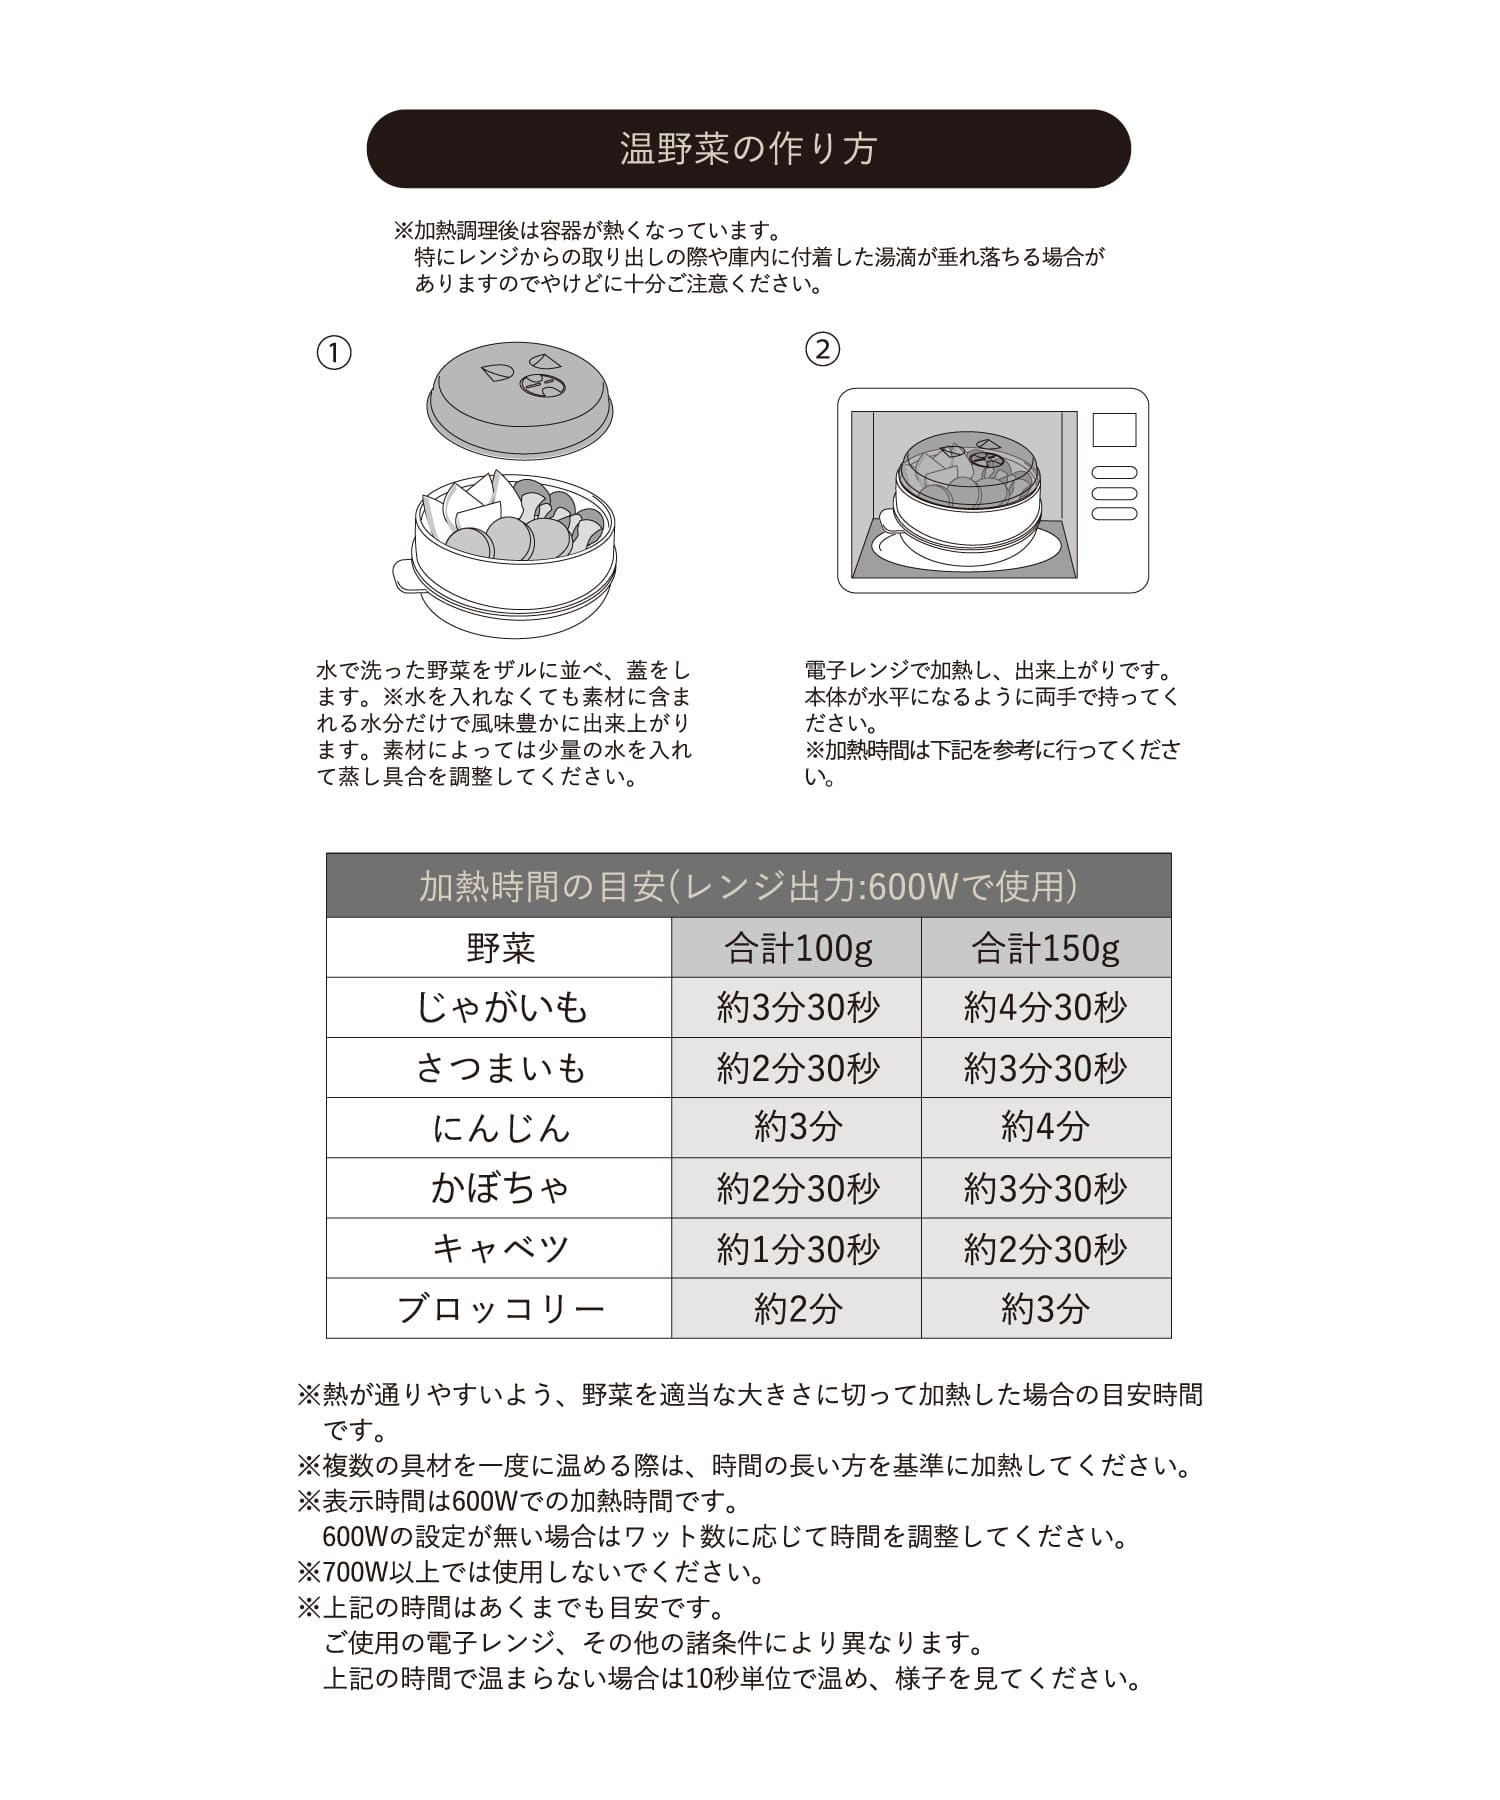 3COINS(スリーコインズ) レンジ調理蒸しメーカー／KITINTO